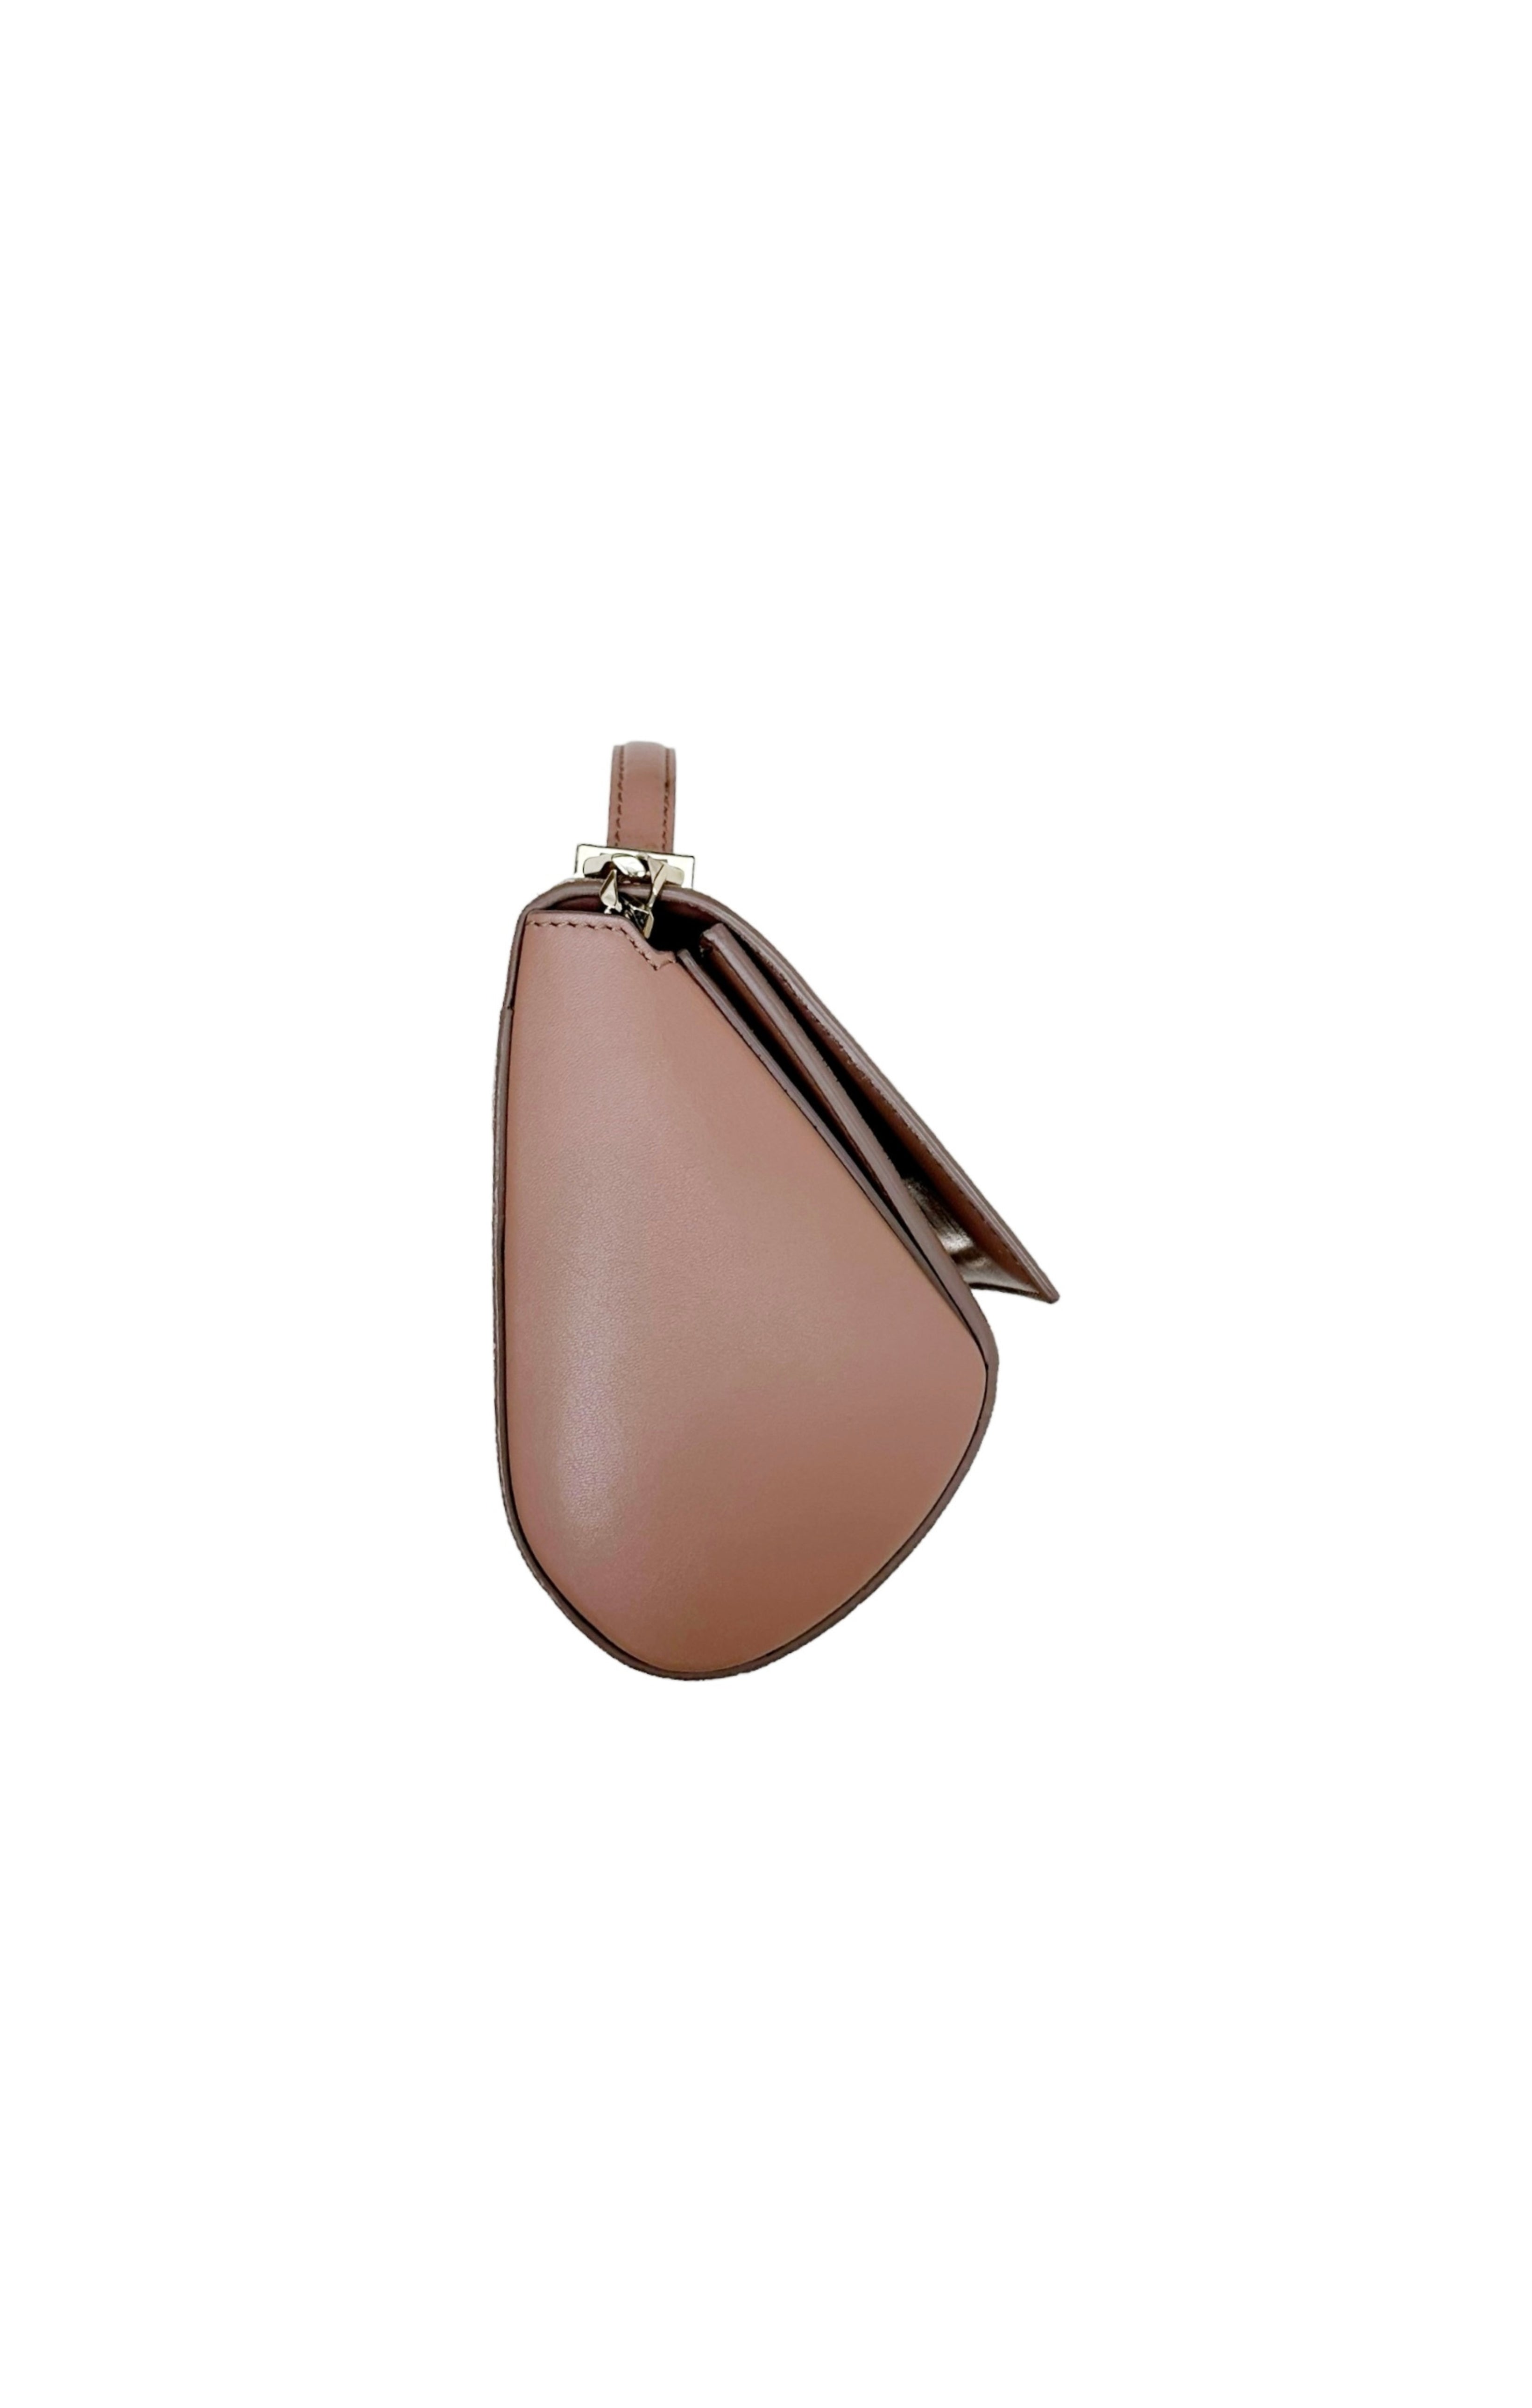 GIVENCHY (RARE) Bag Size: 7" x 4" x 6"; 1.5" drop handle